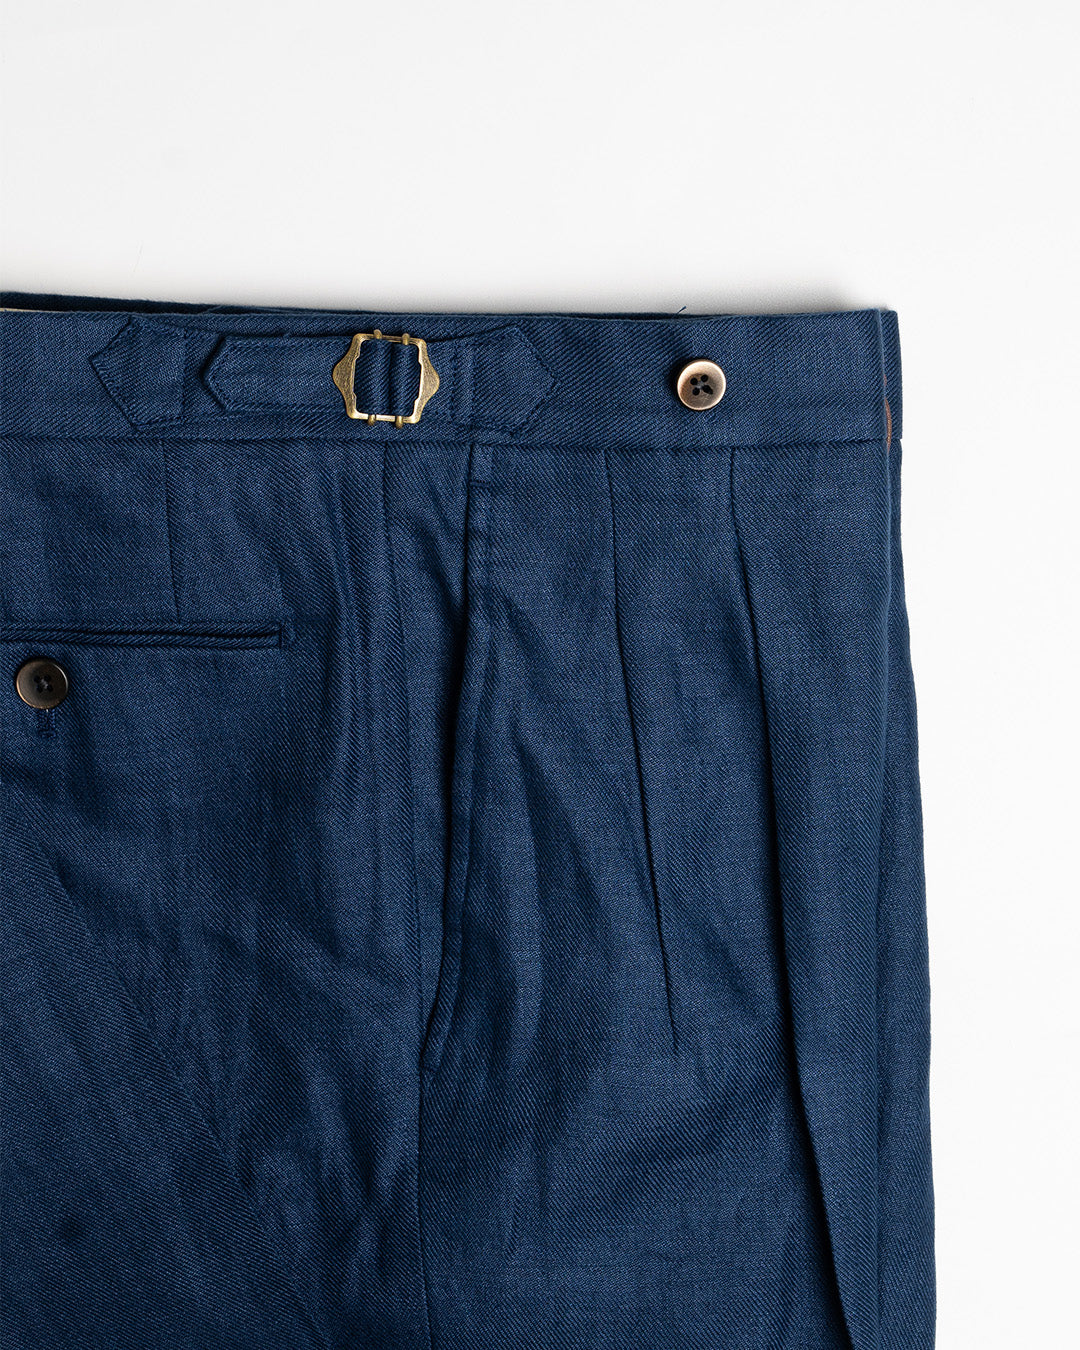 Echizenya Blue Linen Pants (New)